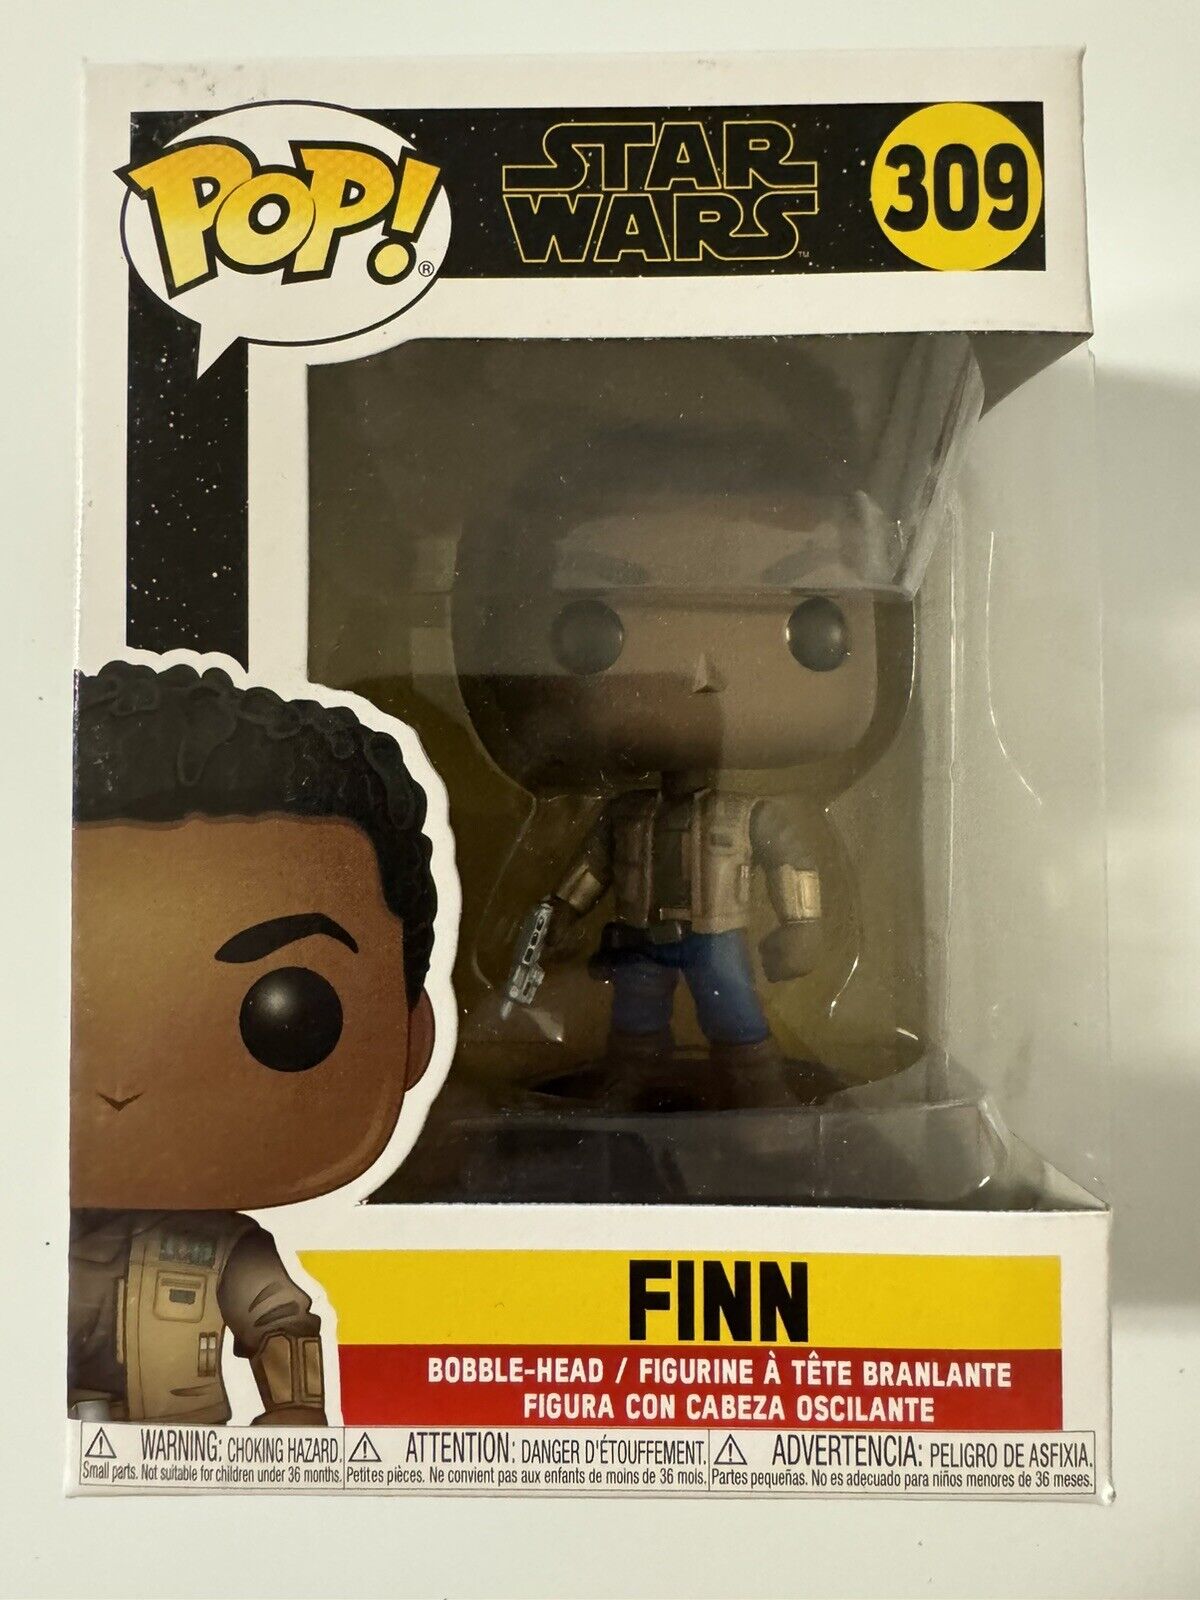 Funko Pop Vinyl: Star Wars - Finn #309